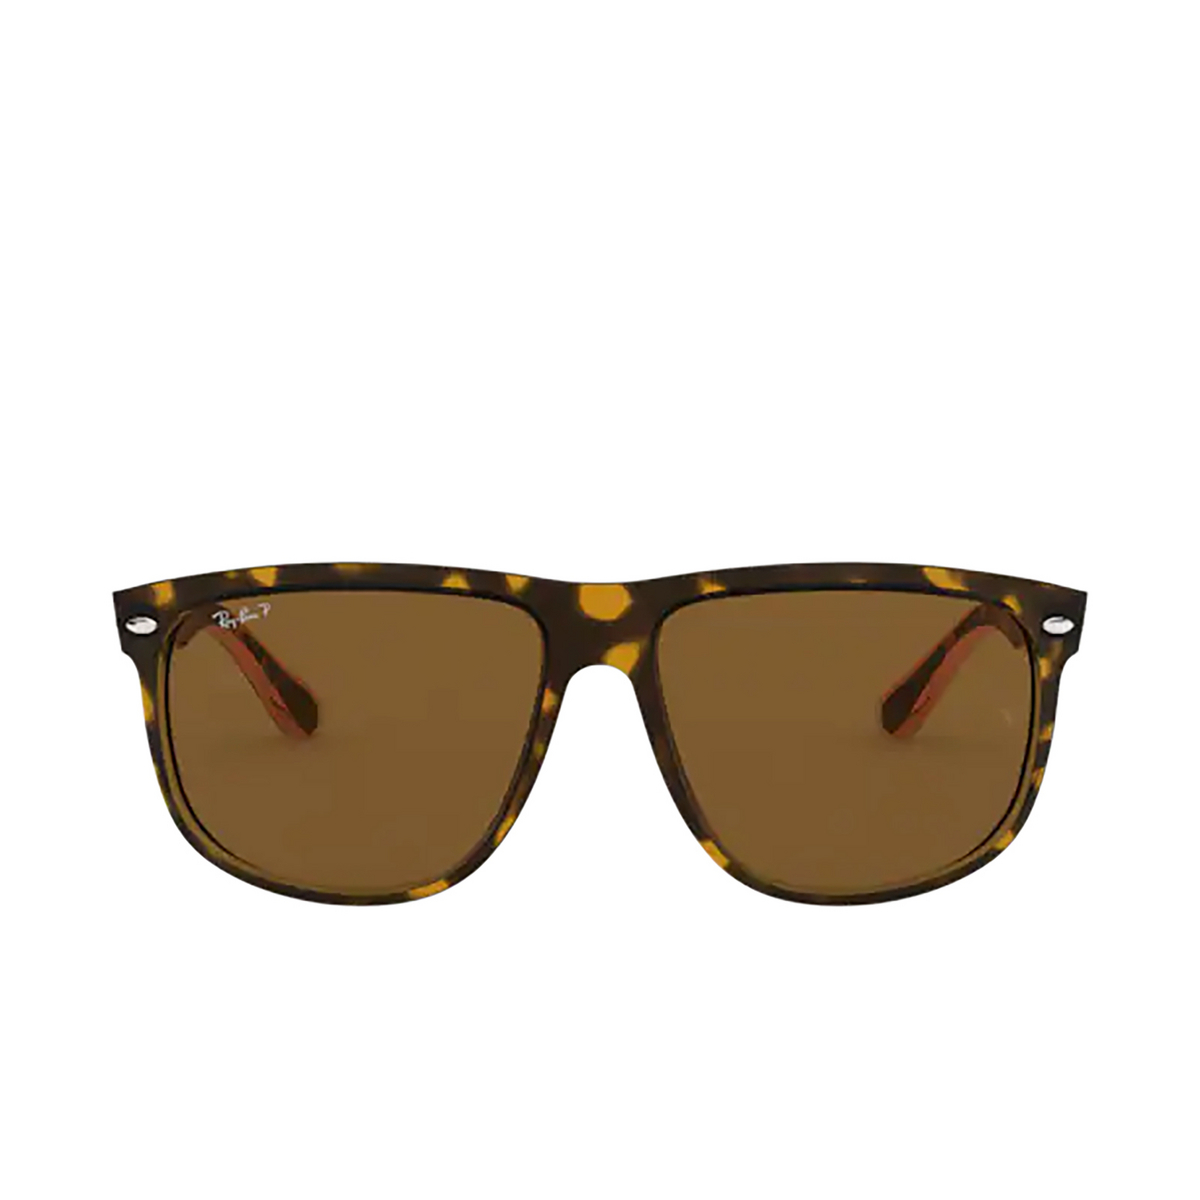 Ray-Ban BOYFRIEND Sunglasses 710/57 Light Havana - front view